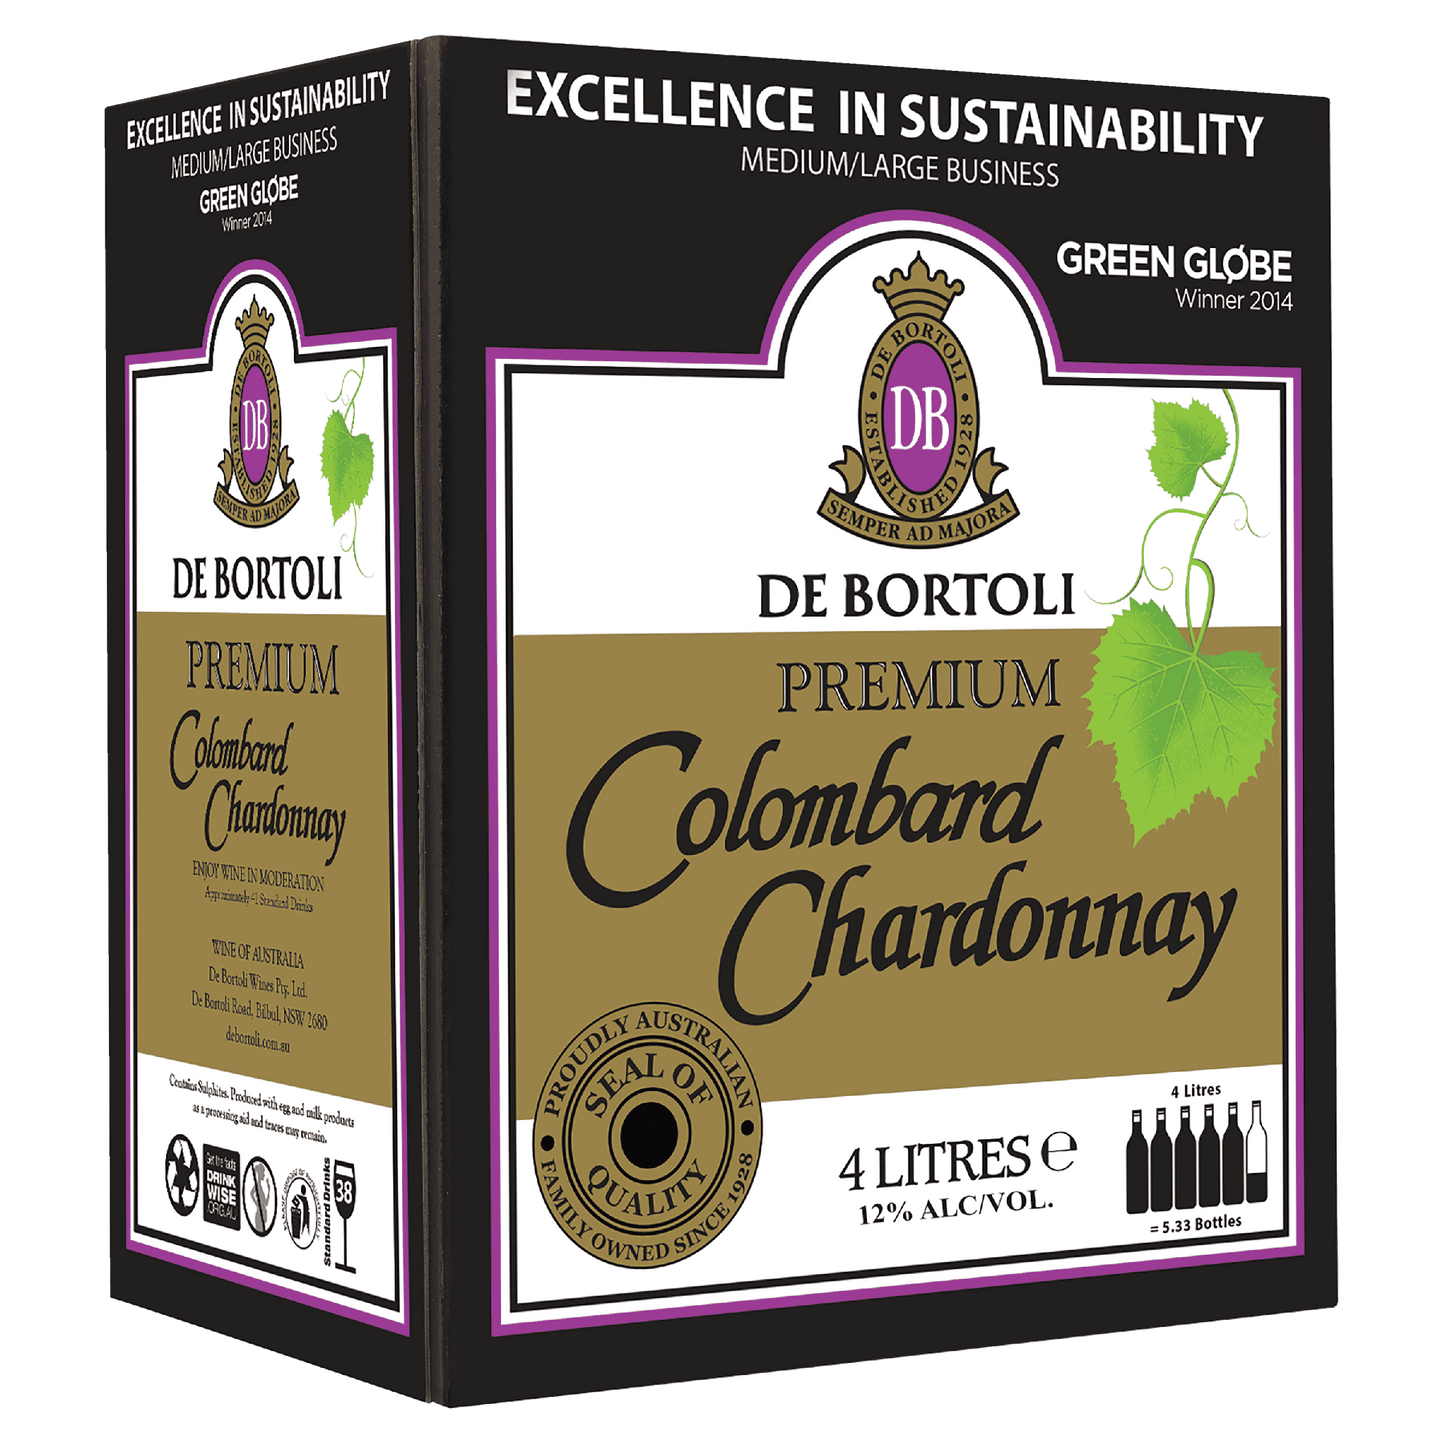 De Bortoli Premium Colombard Chardonnay